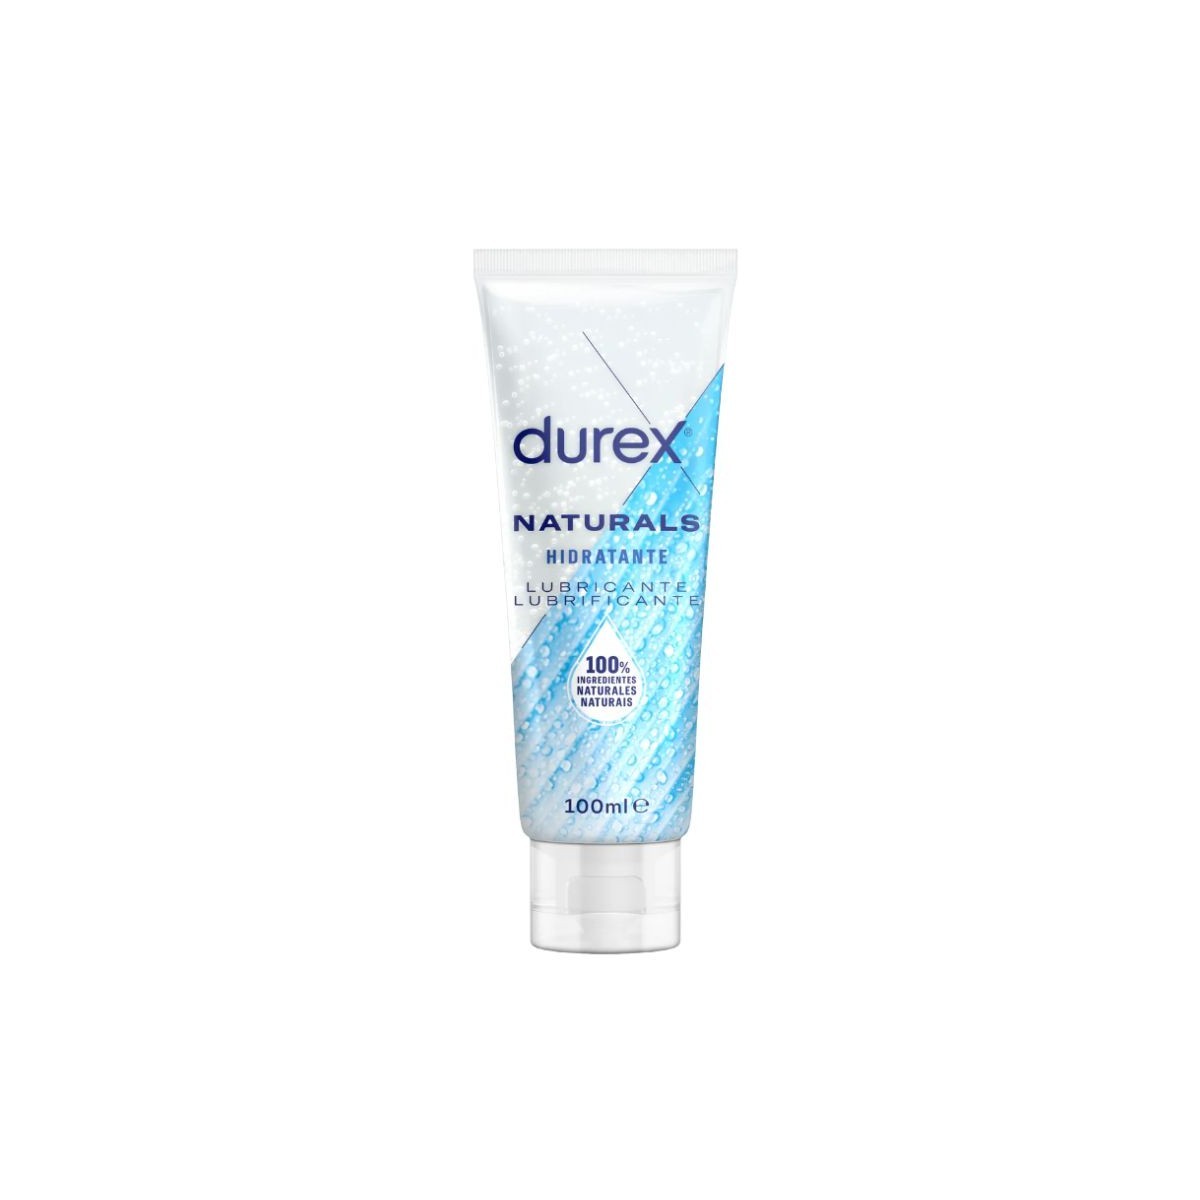 Durex Naturals Intimate Gel Extra Hidratante, 100ml.